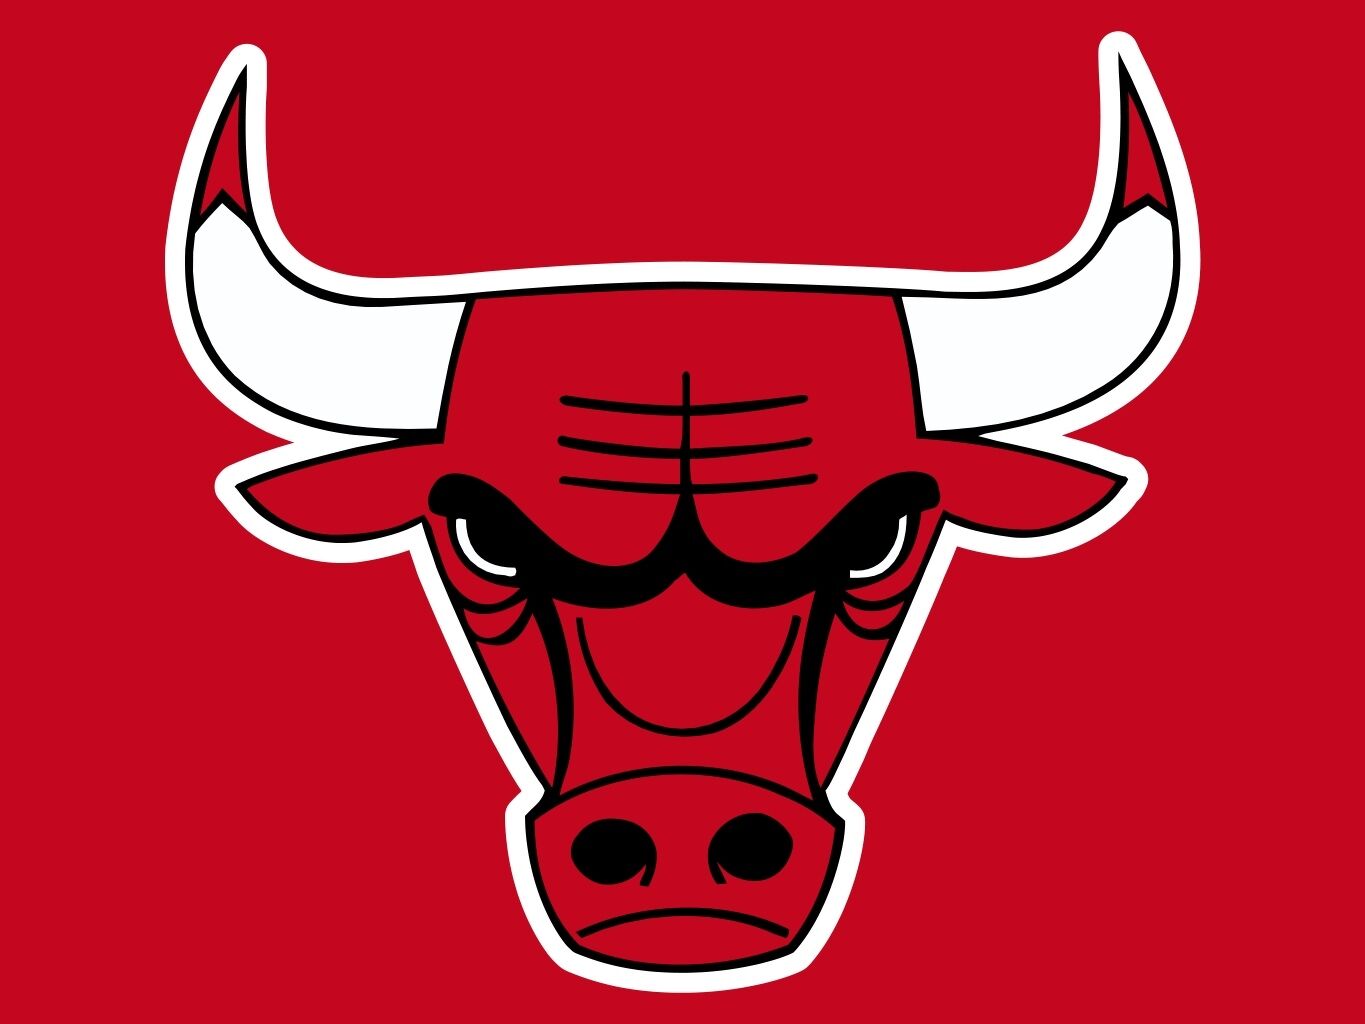 Bulls re-sign former KU guard Kirk Hinrich to 2-year deal